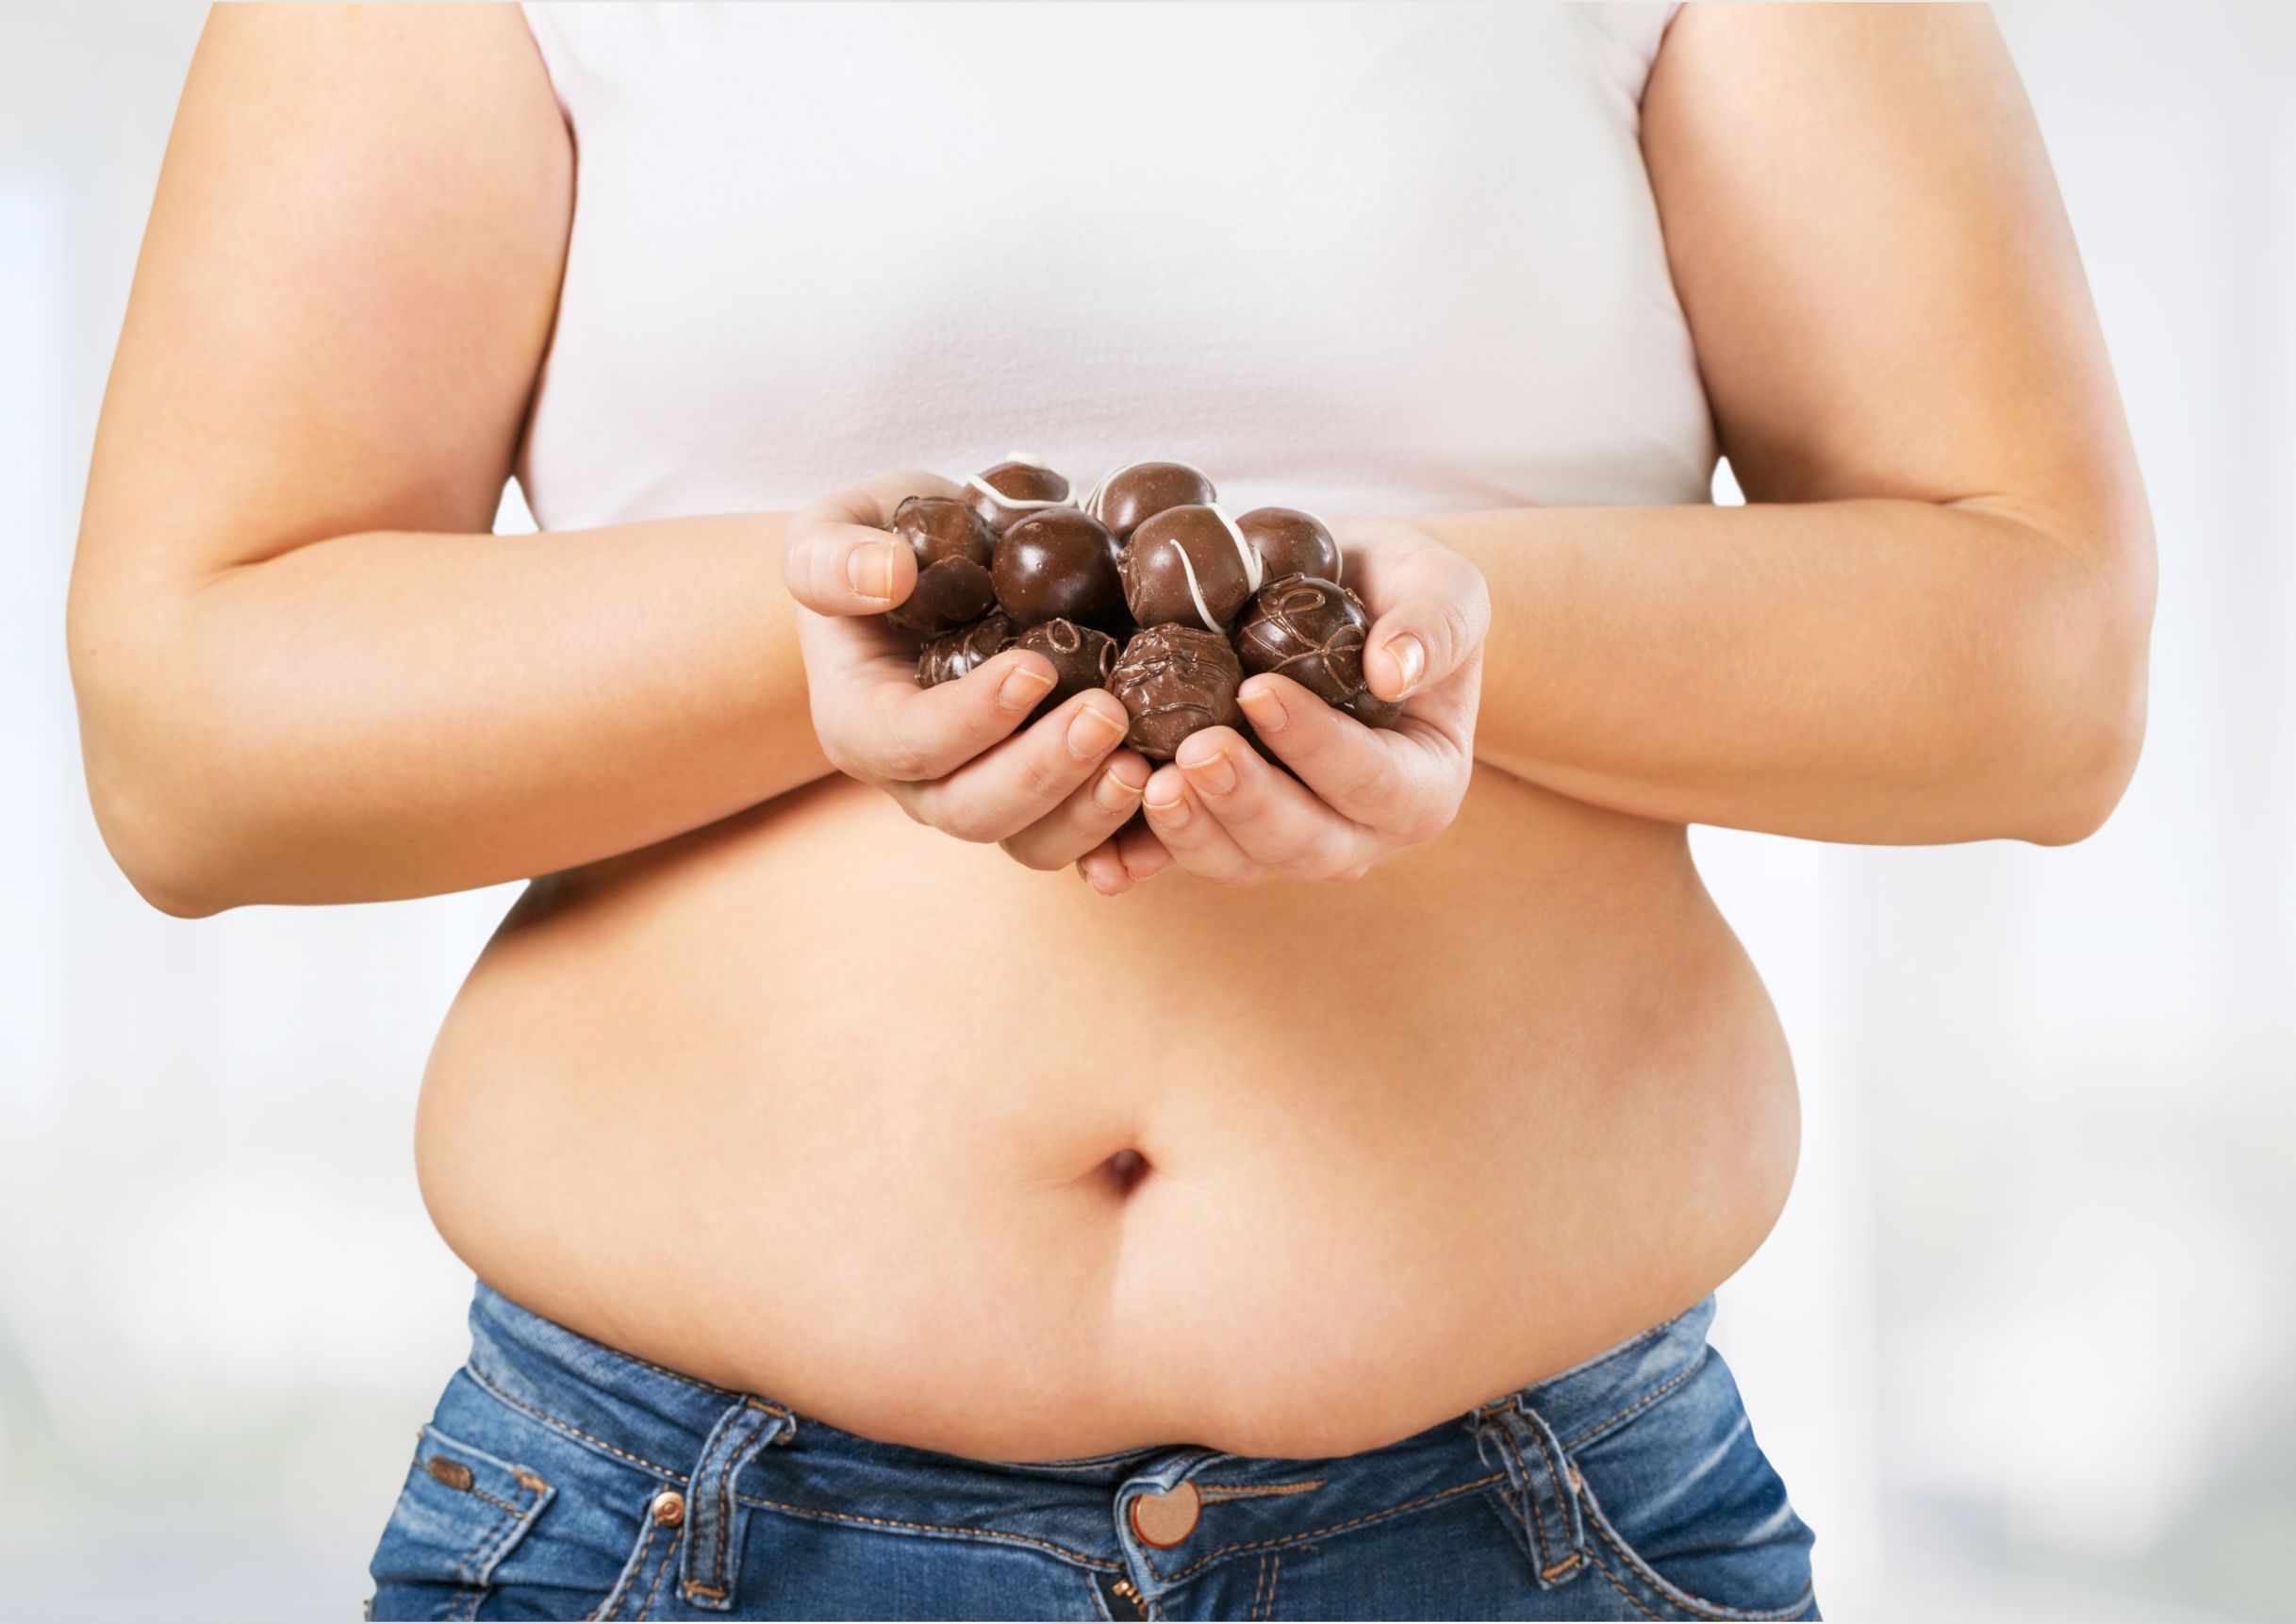 Cum obtii un abdomen mai plat in doua saptamani: 4 trucuri care stimuleaza metabolismul